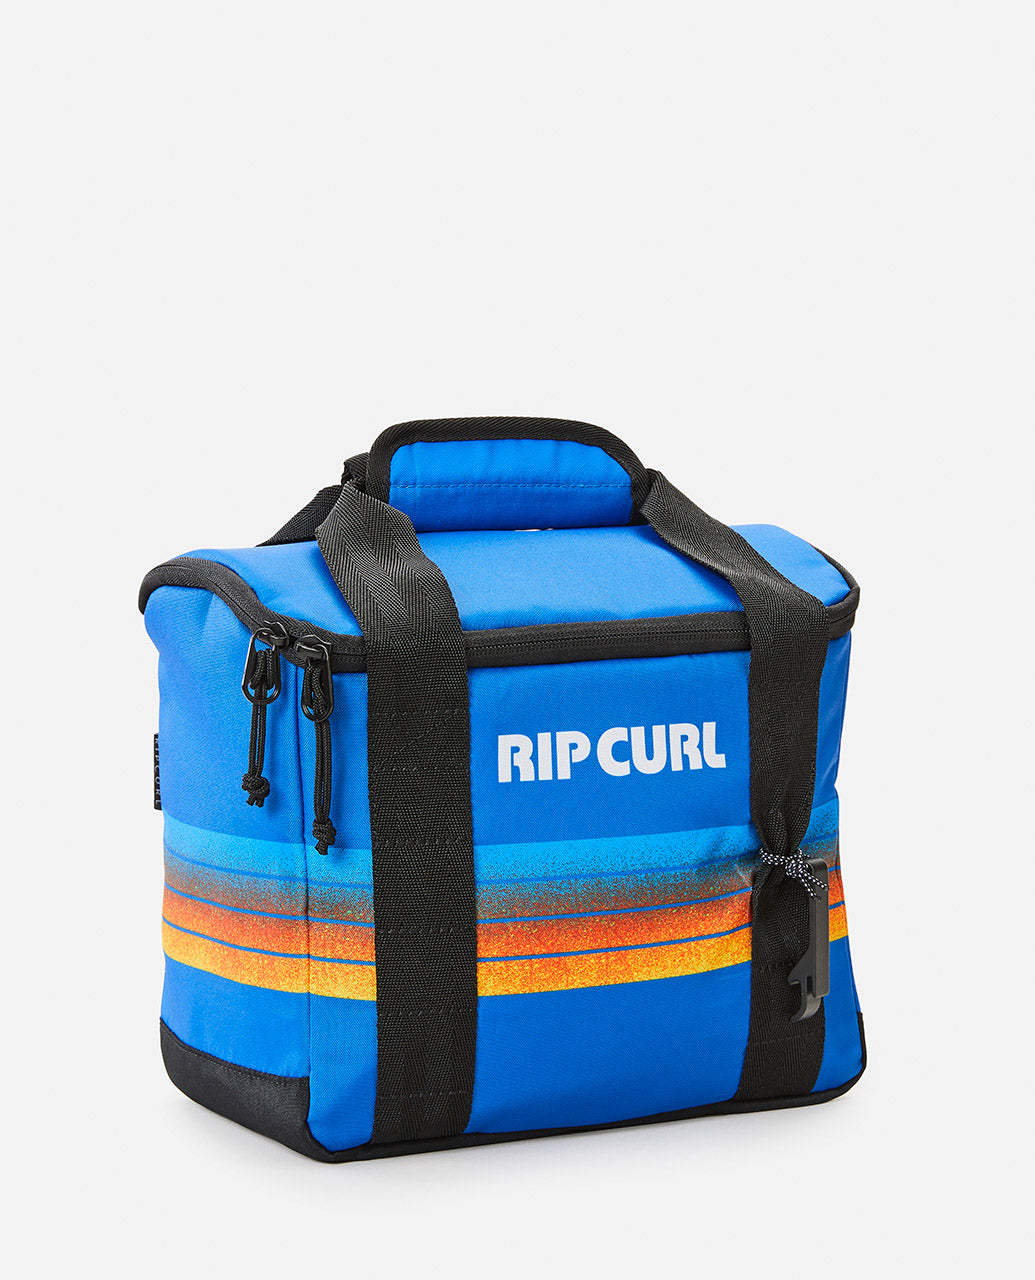 Rip Curl Surf Revival Sixer Cooler Bag